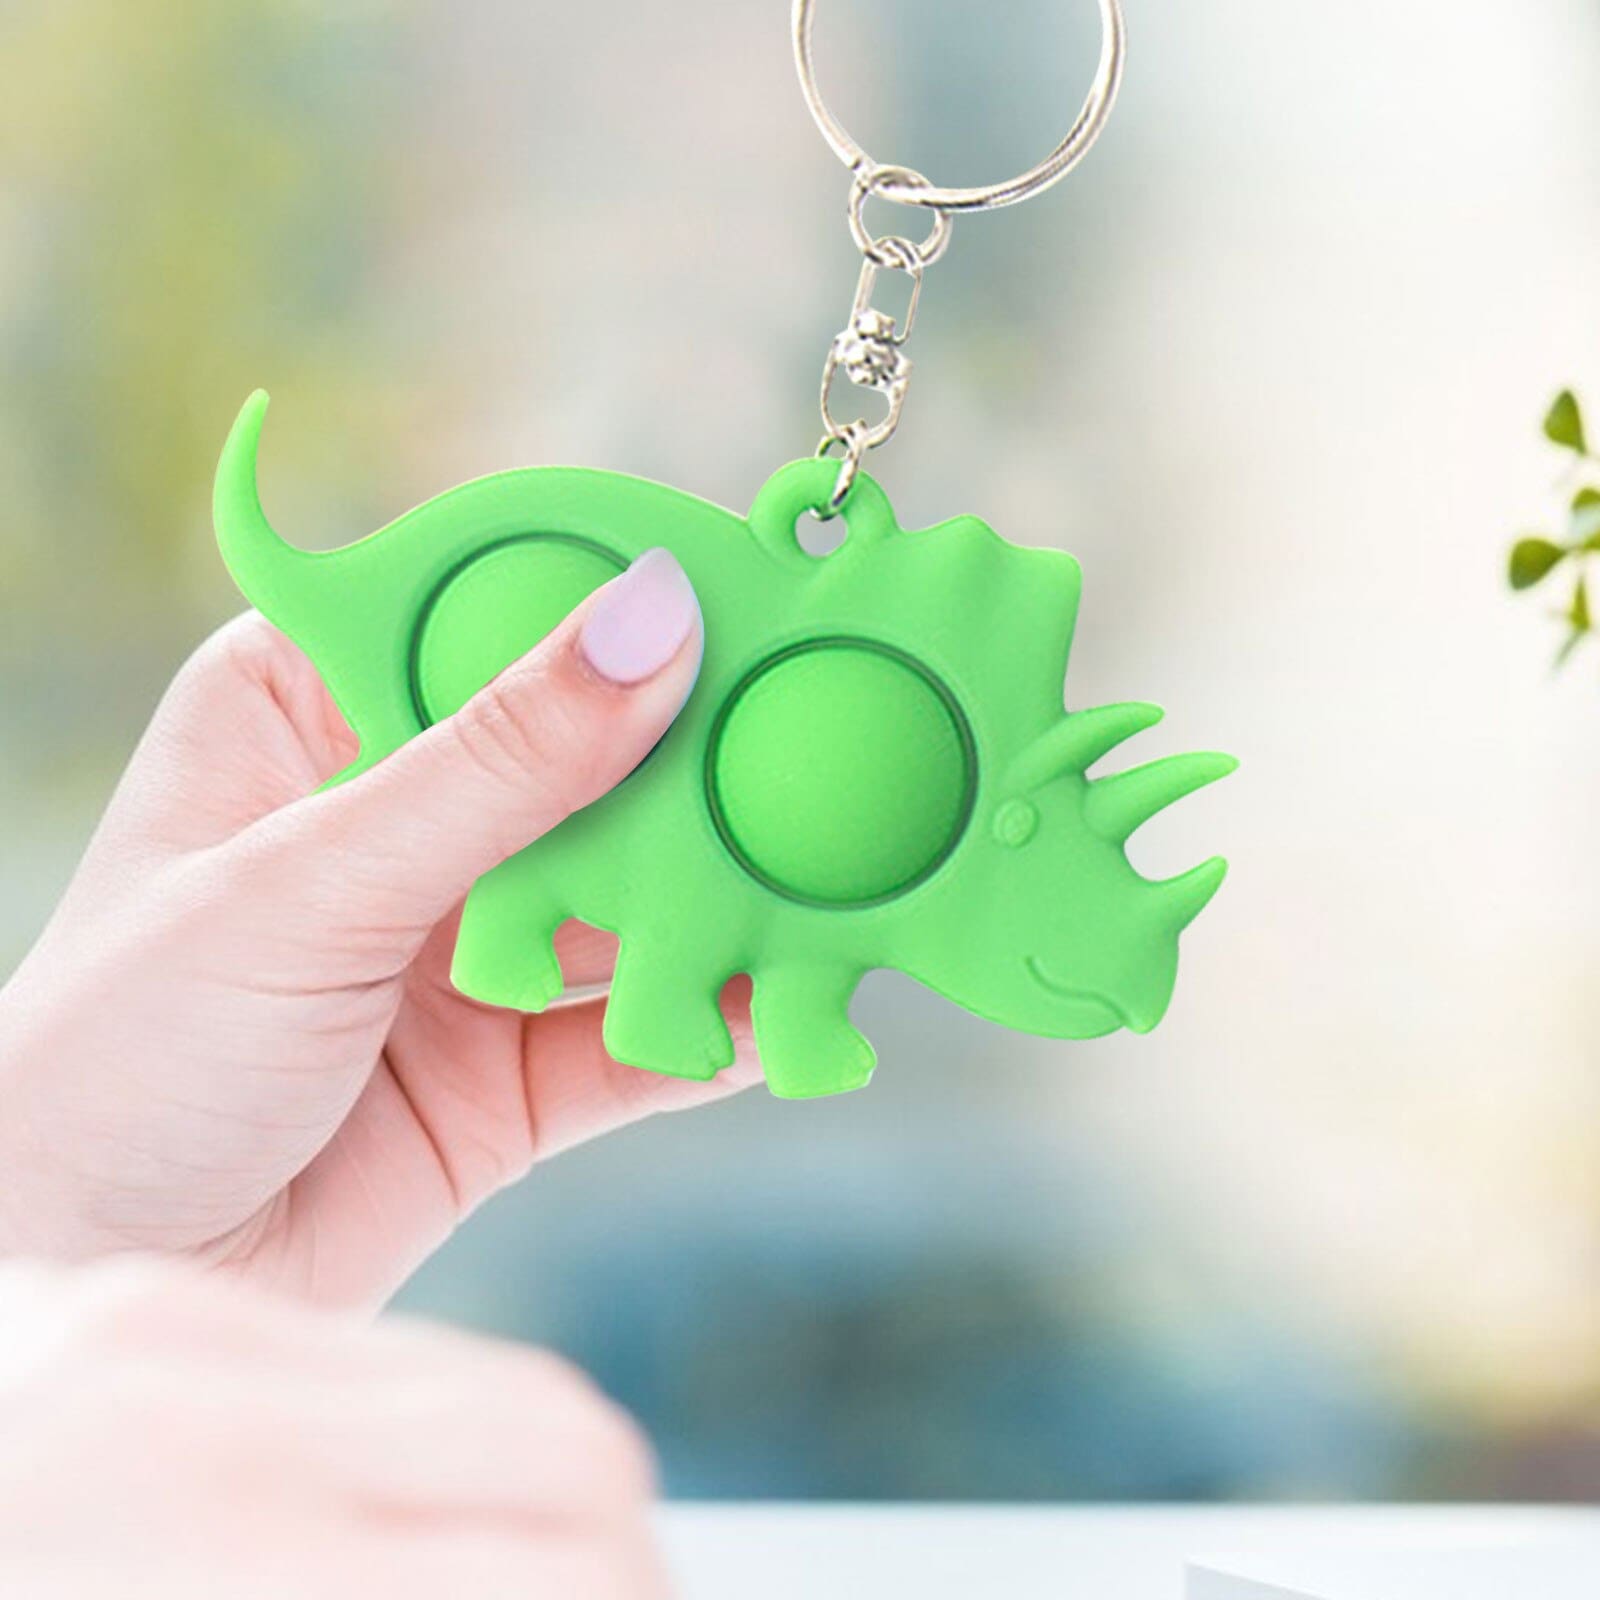 Simple Dimple Antistress Fidget Toy